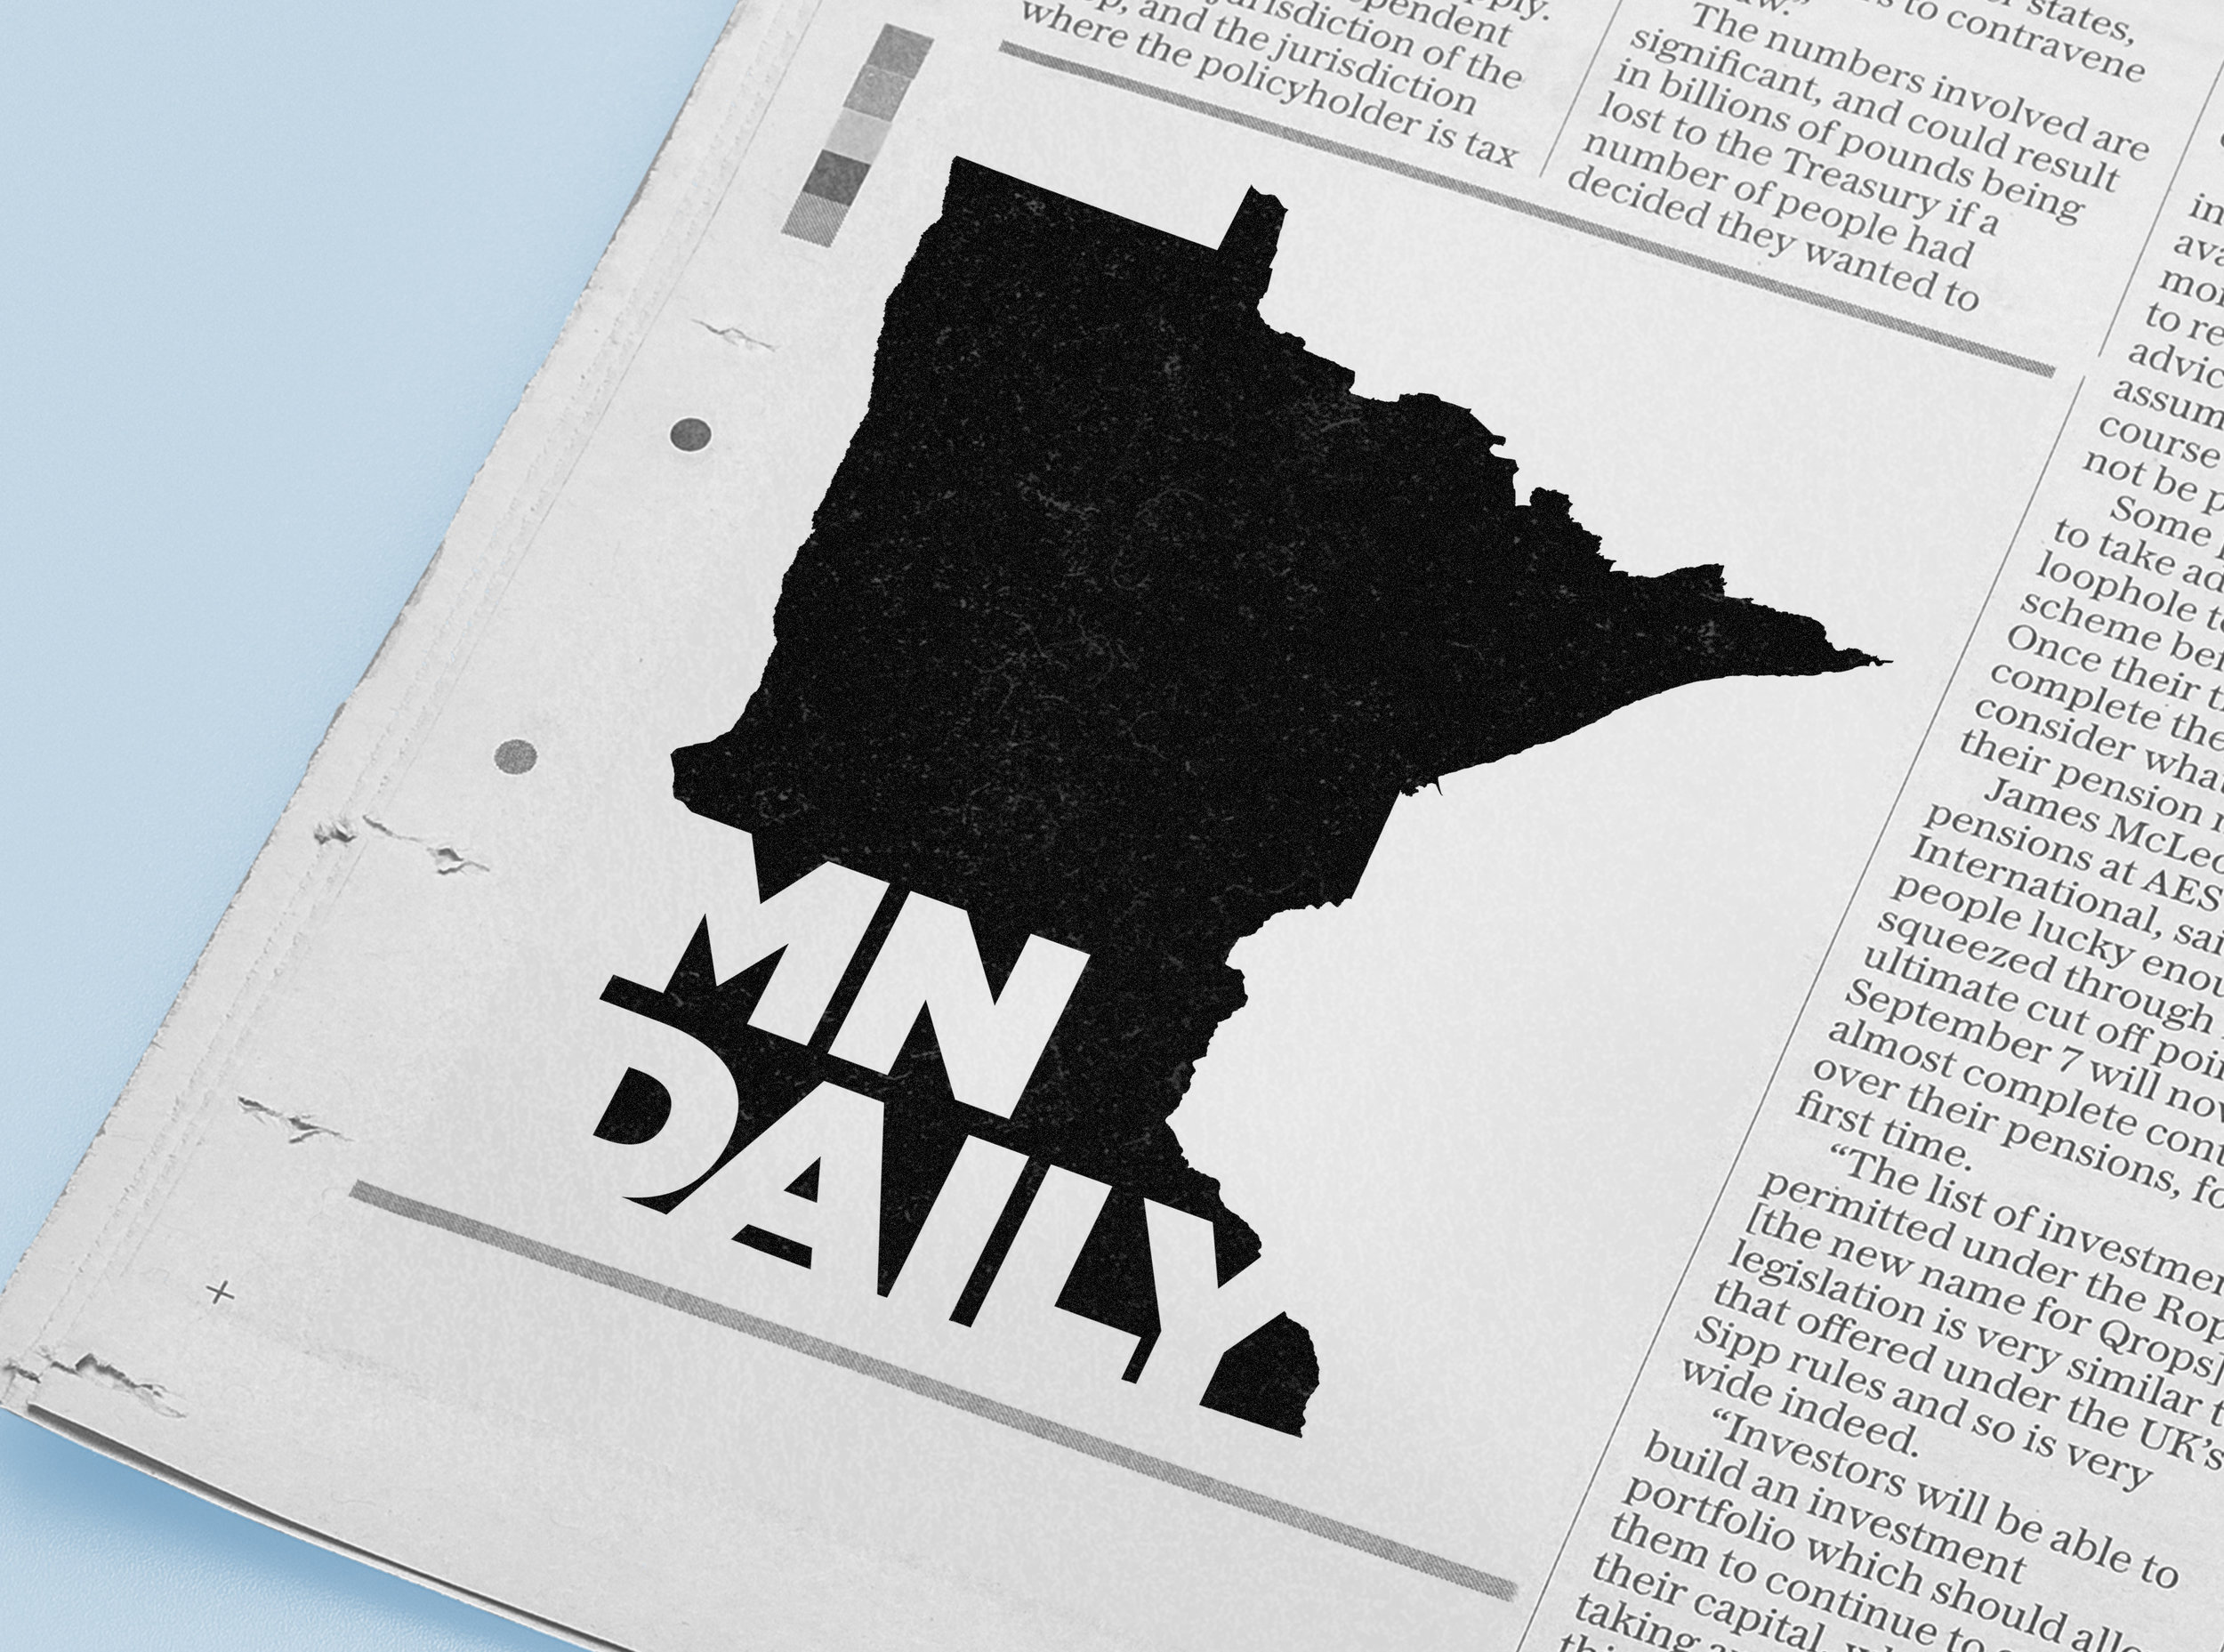 The Minnesota Daily